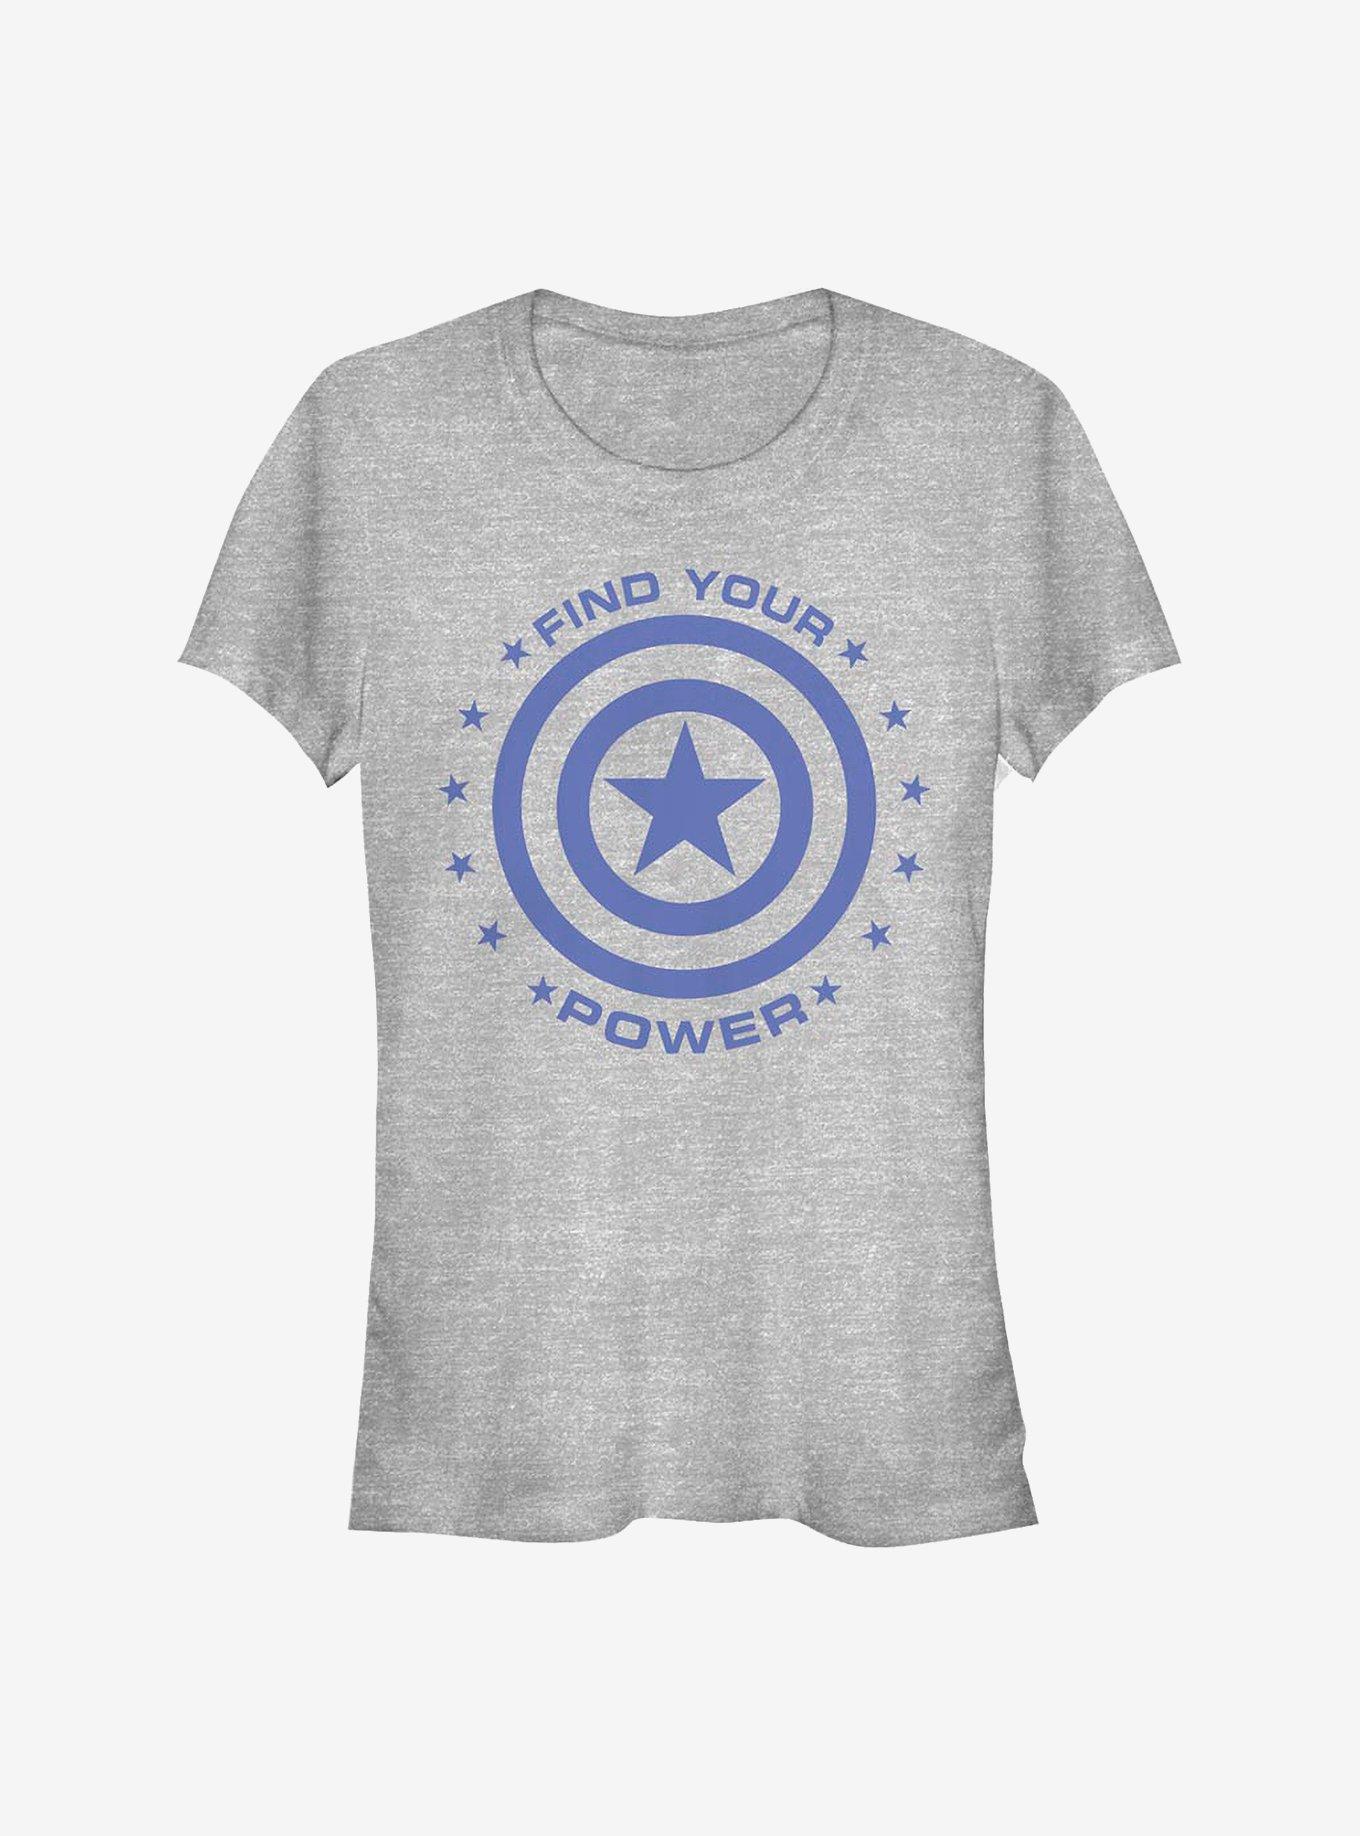 Marvel Captain America Captain Power Girls T-Shirt, ATH HTR, hi-res